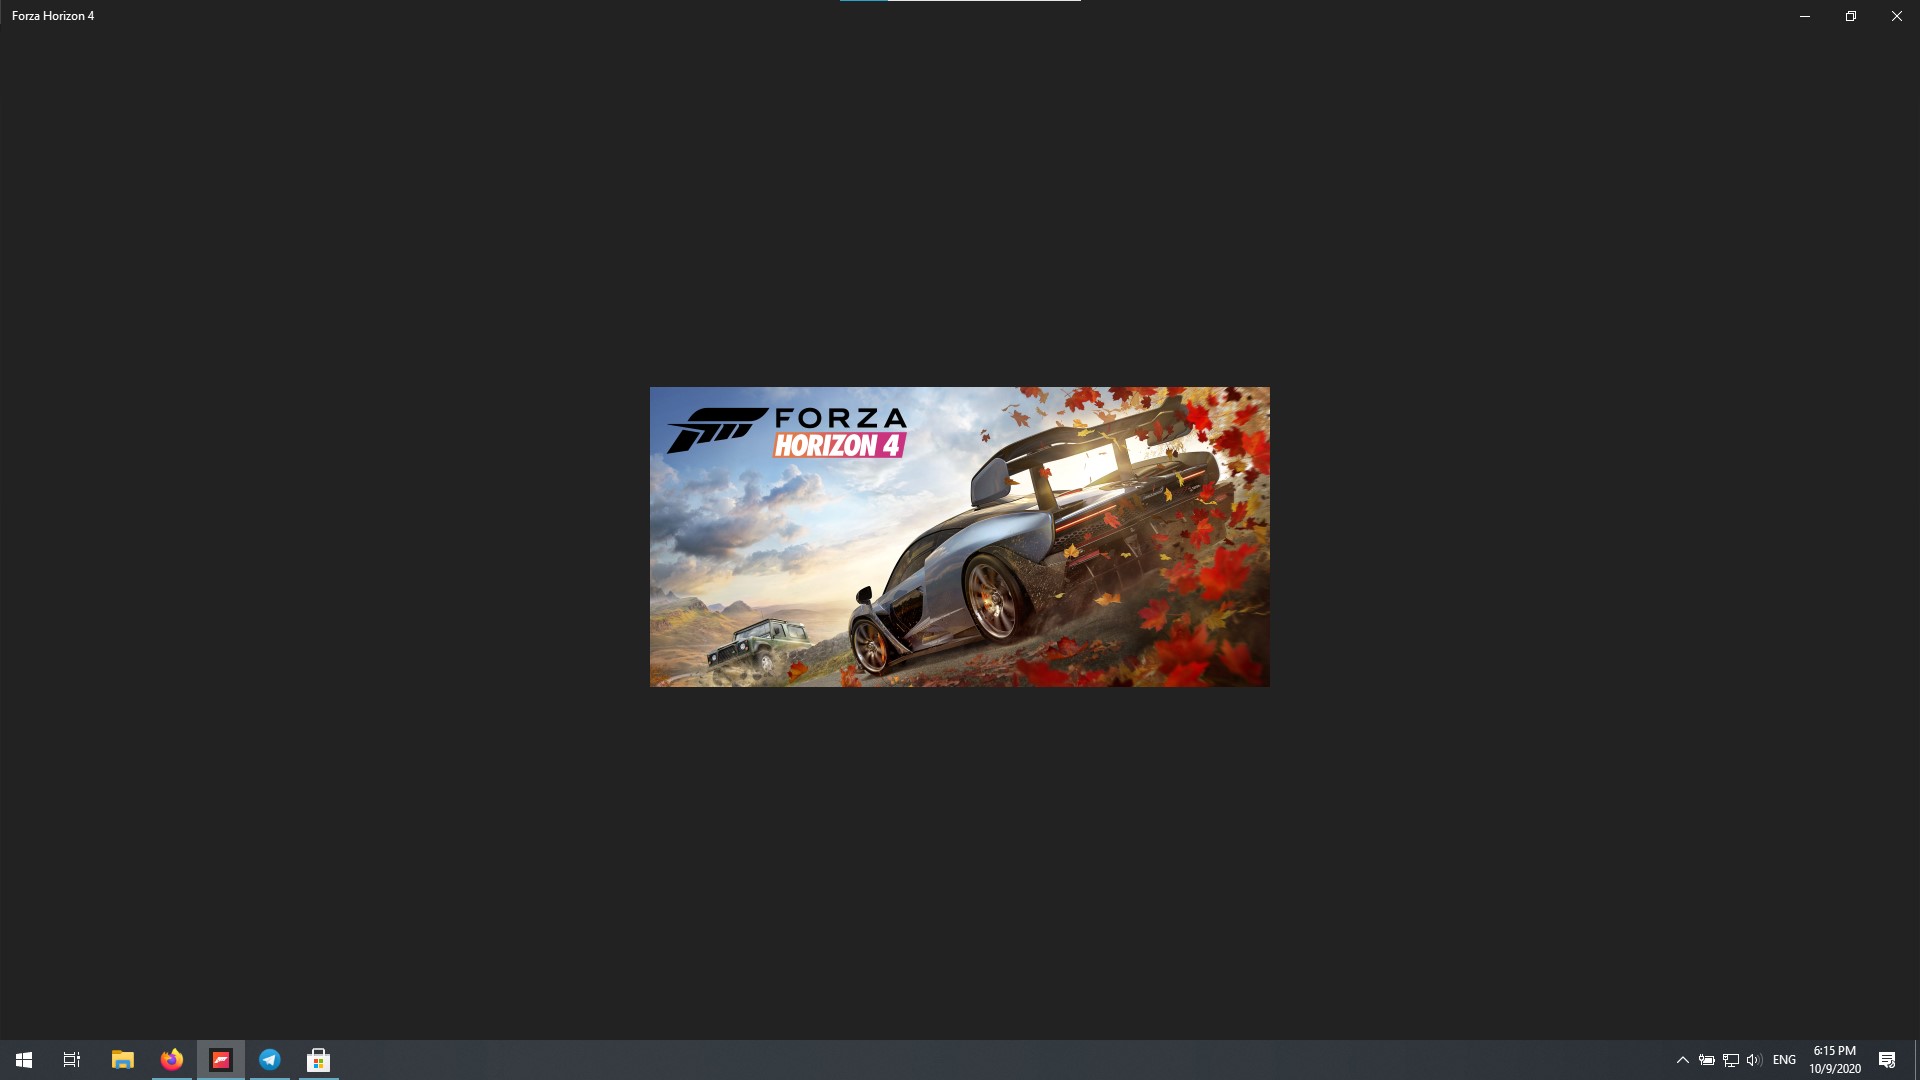 Unable to run Forza Horizon 4 on Windows 10 2004